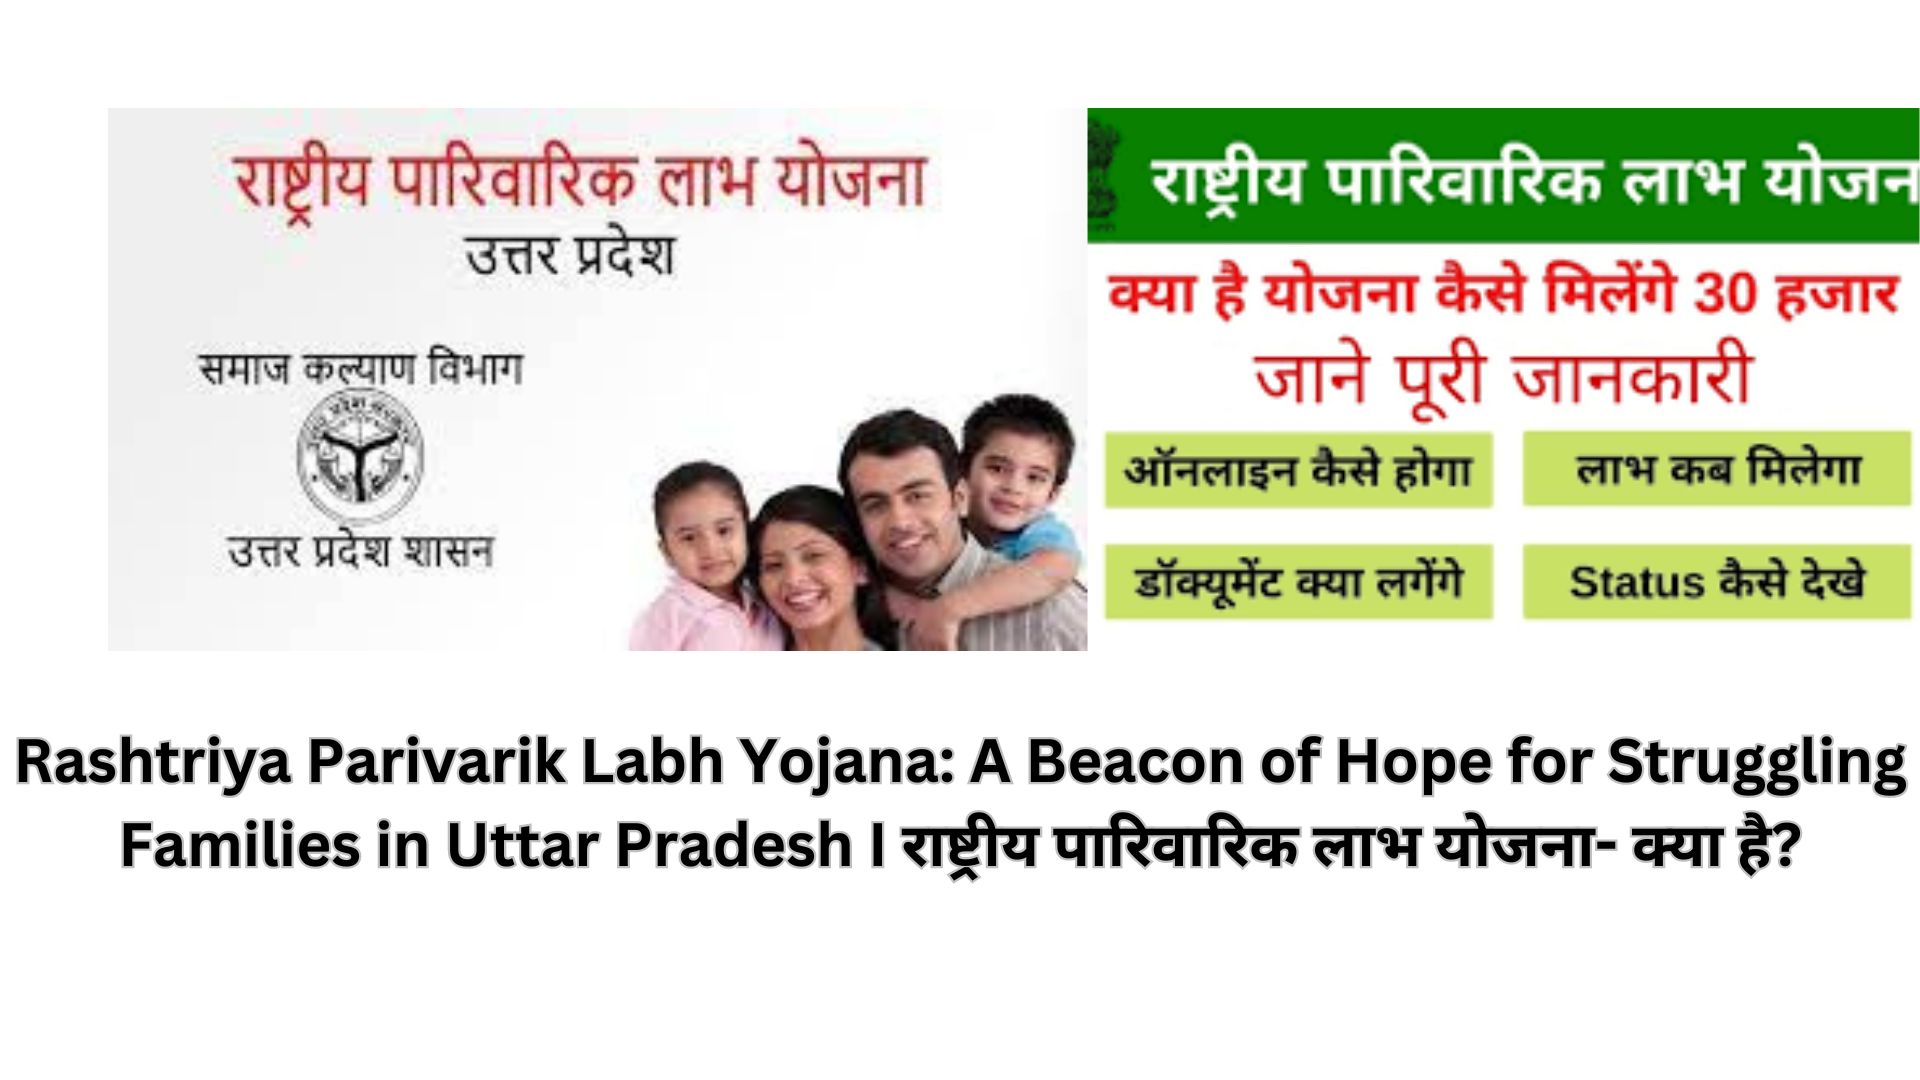 Rashtriya Parivarik Labh Yojana: A Beacon of Hope for Struggling Families in Uttar Pradesh I राष्ट्रीय पारिवारिक लाभ योजना- क्या है?